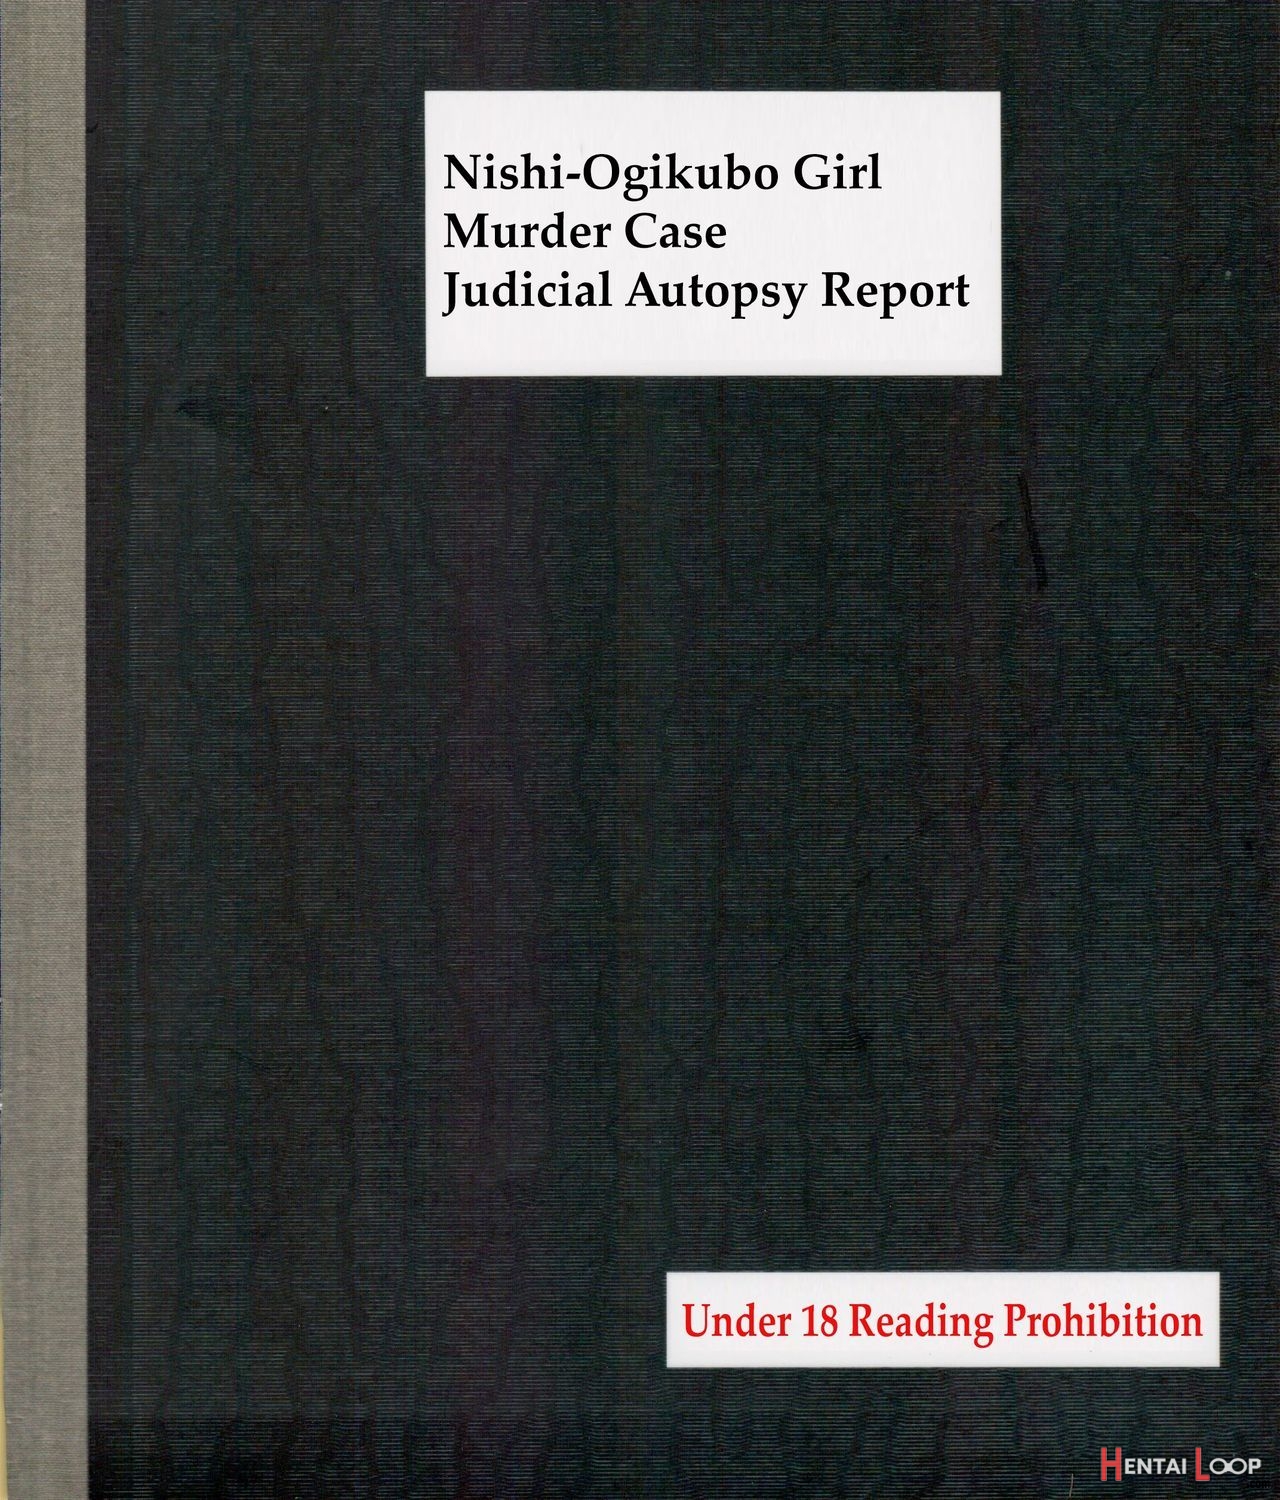 Nishi-ogikubo Girl Murder Case Judicial Autopsy Report page 1